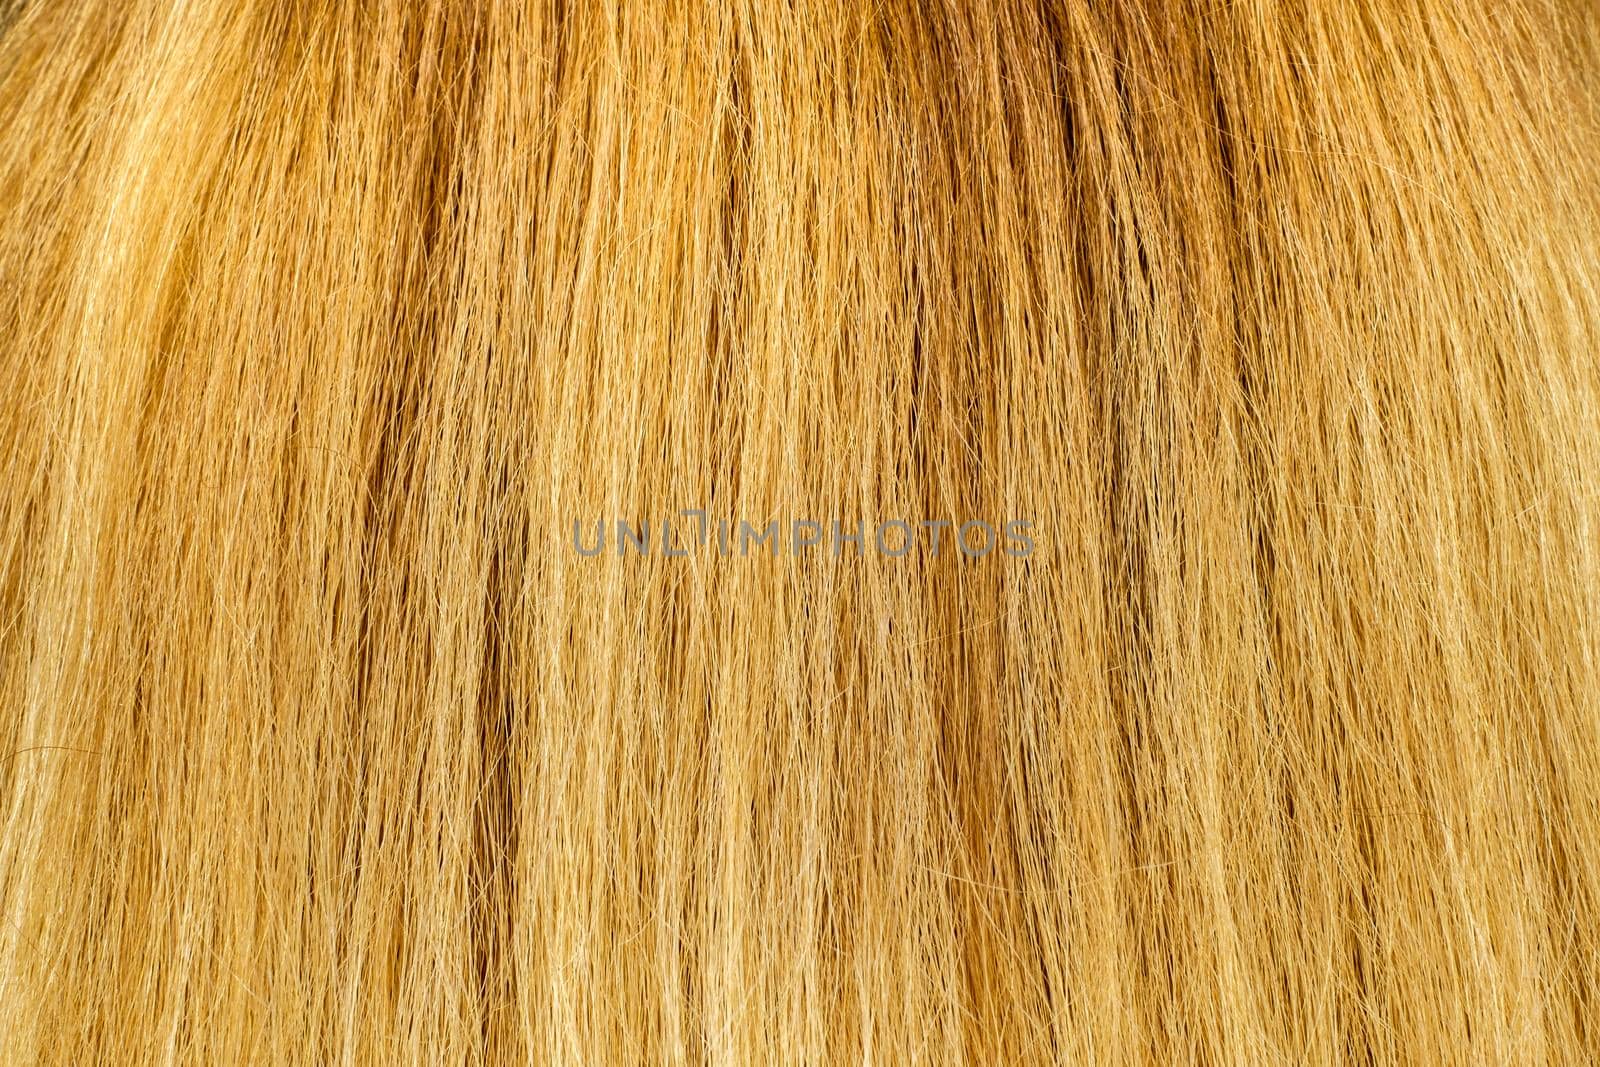 Blond Hair Texture, close view